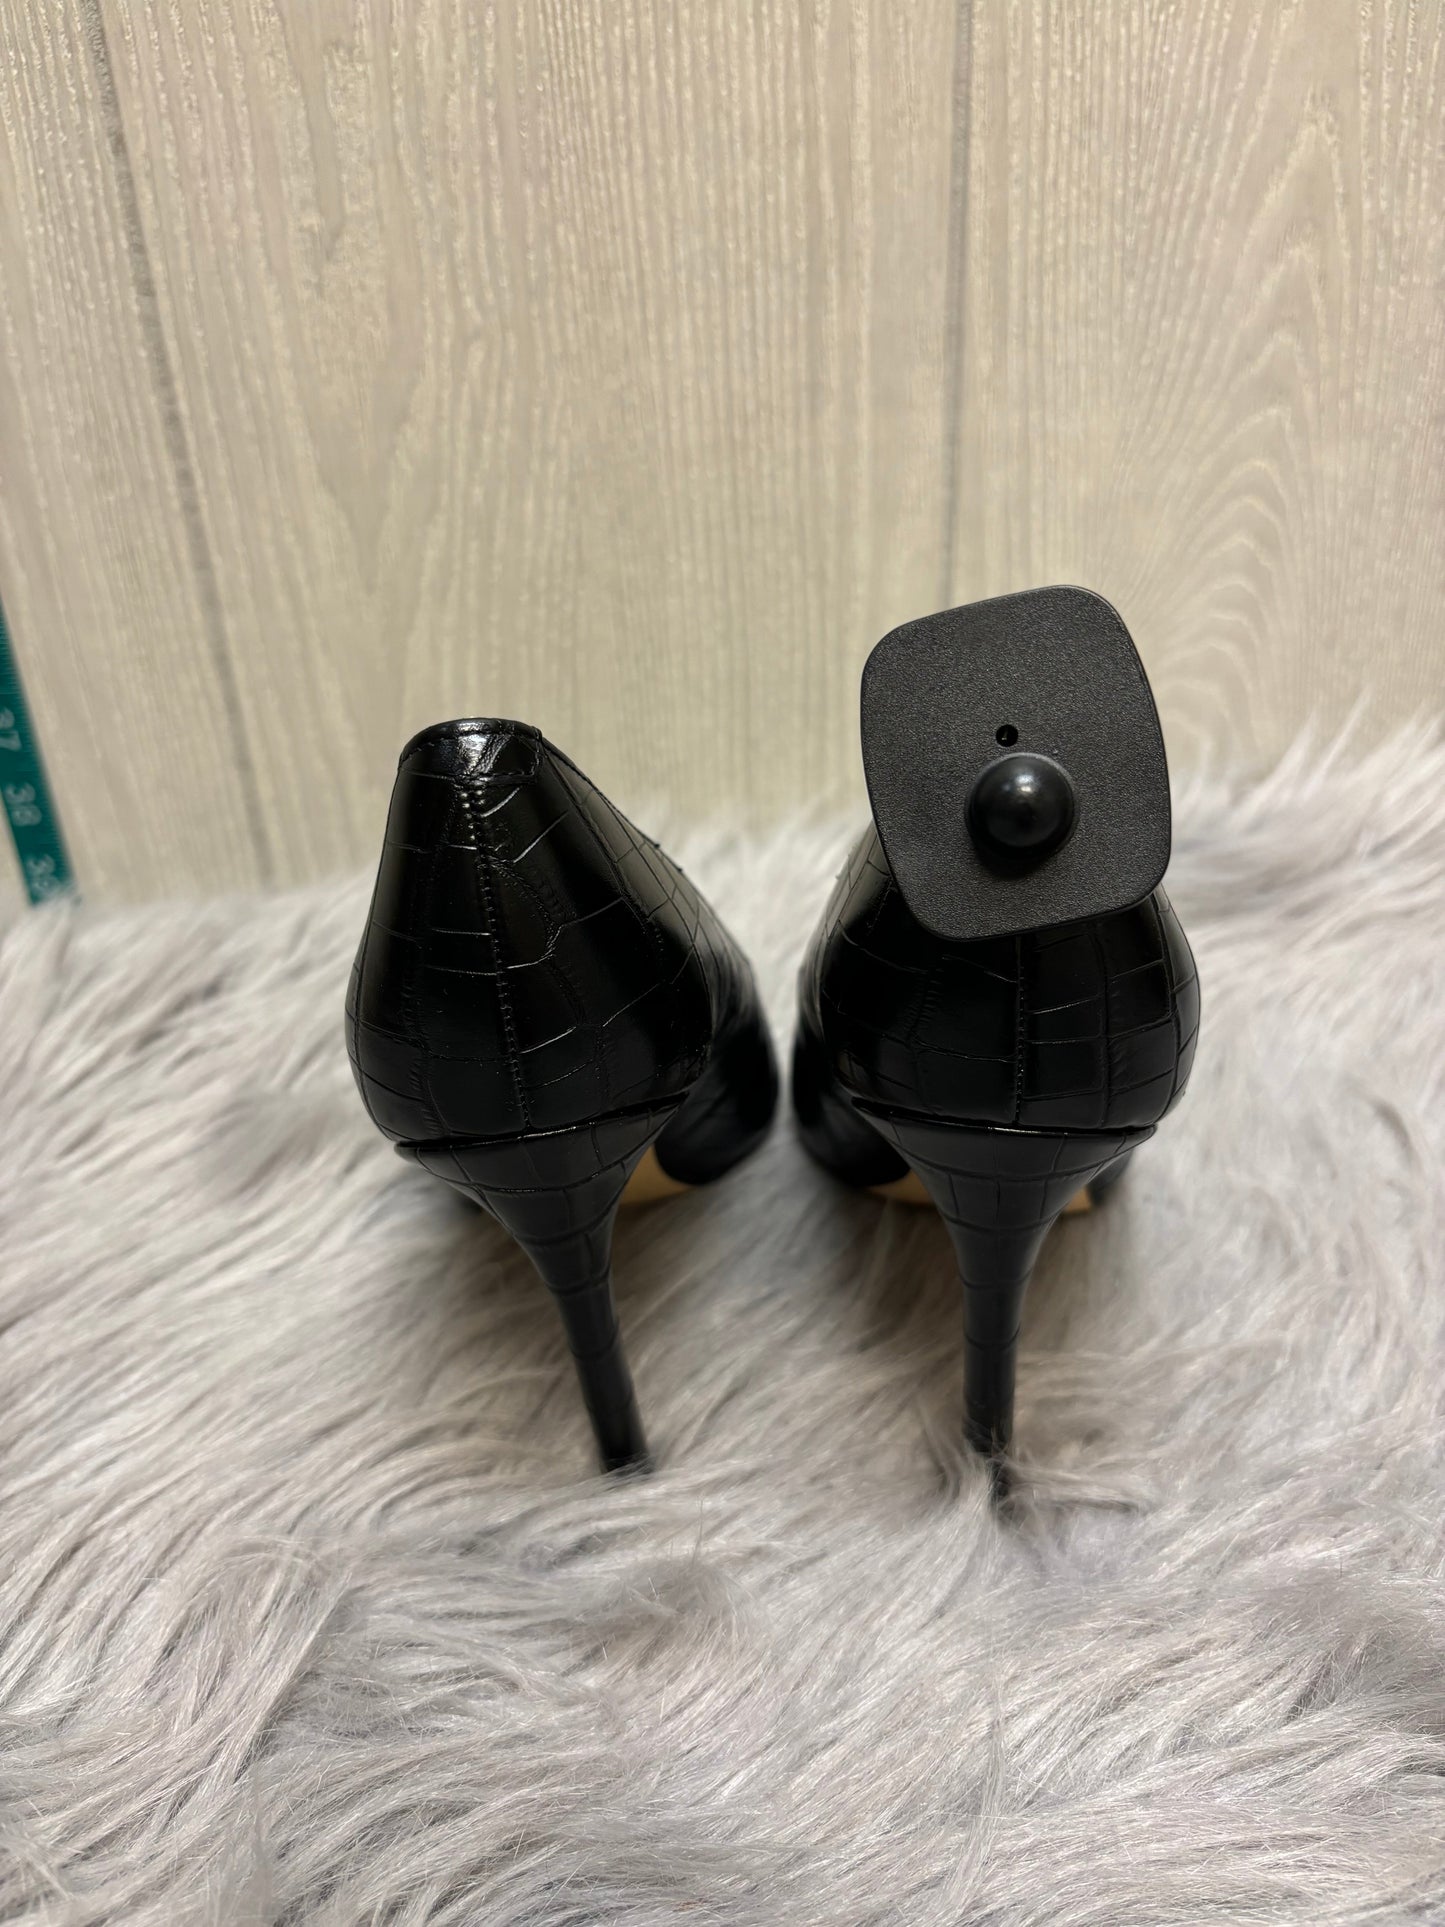 Black Shoes Heels Stiletto Nine West, Size 7.5